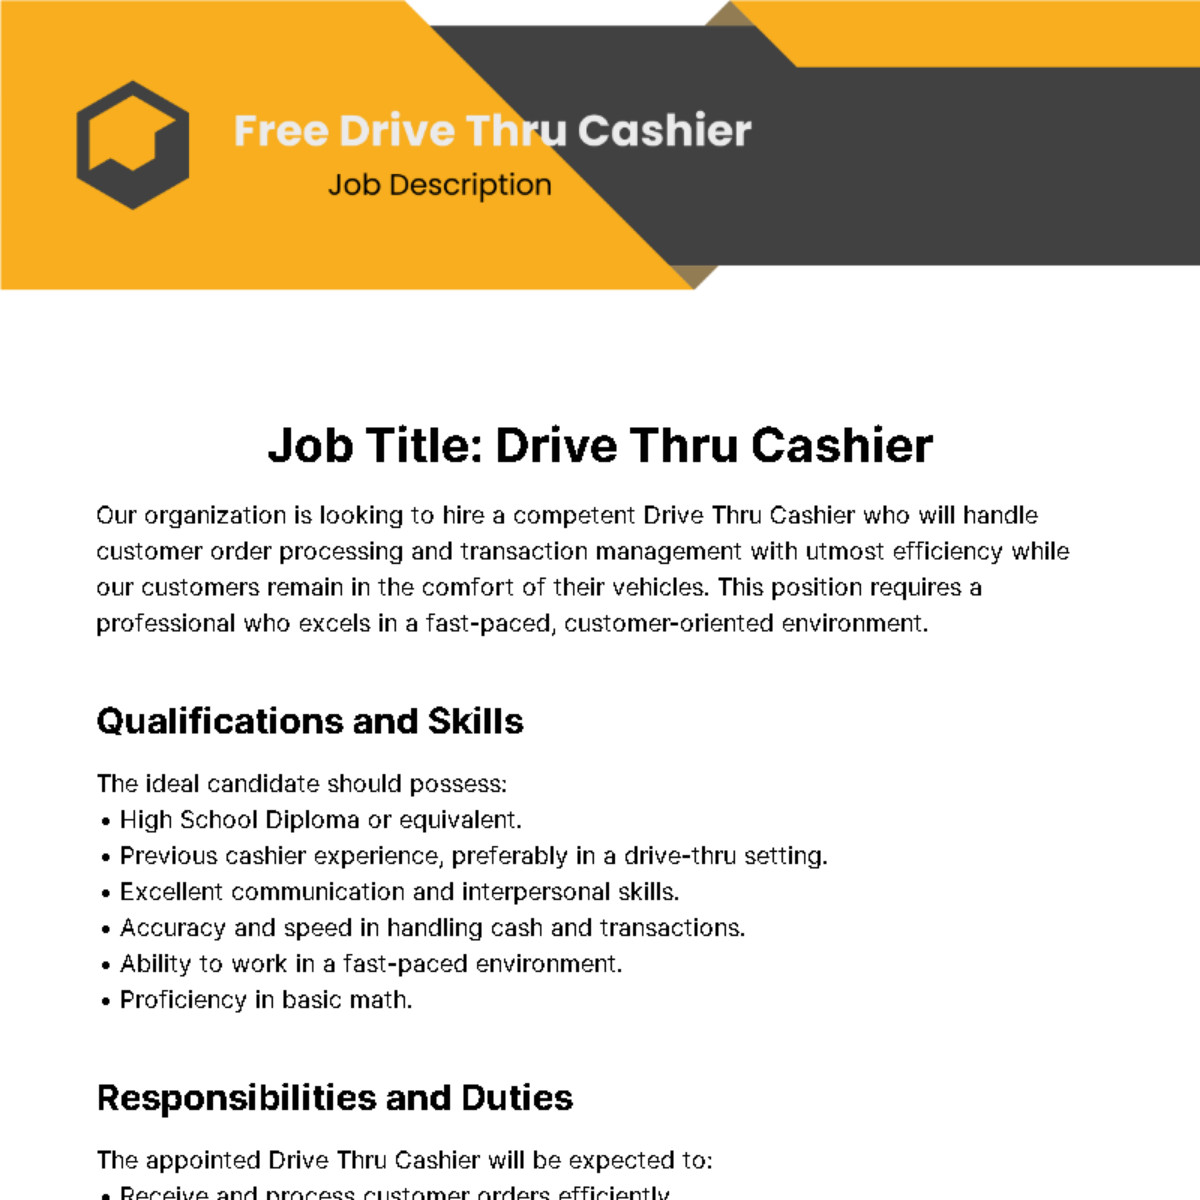 Free Drive Thru Cashier Job Description Template